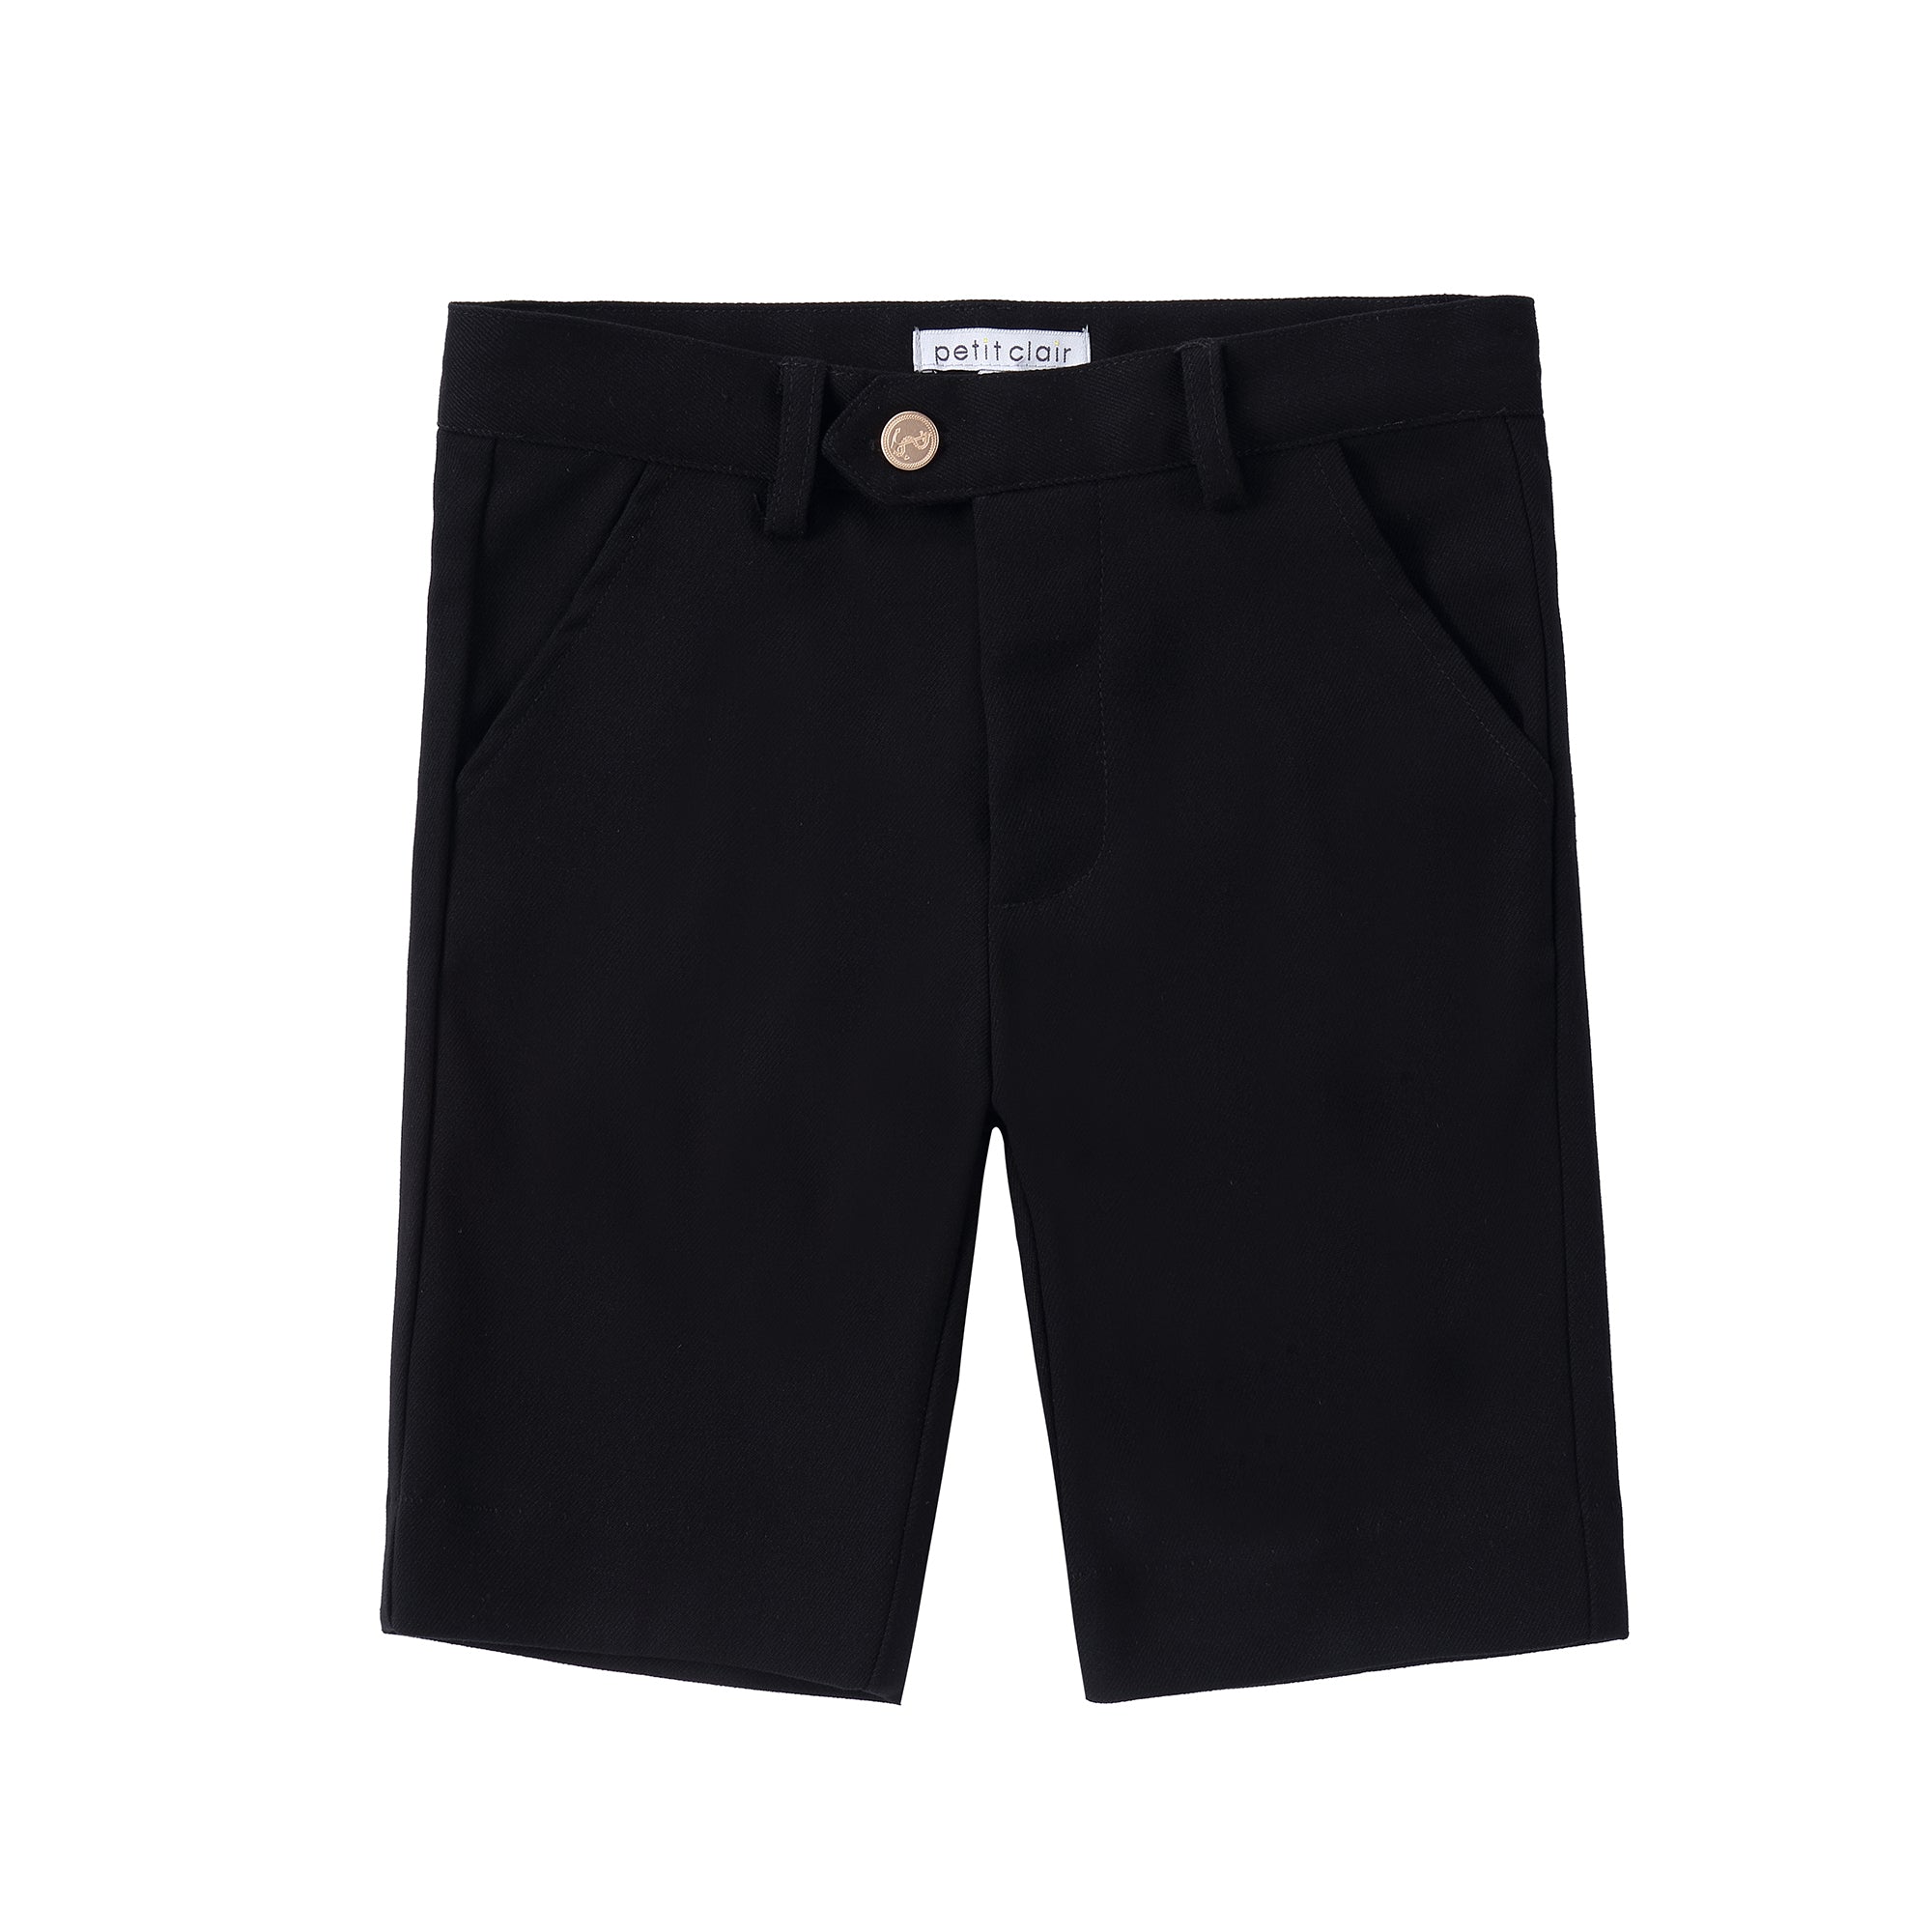 Black Shorts with Gold Button Detail (Matches Blazer)